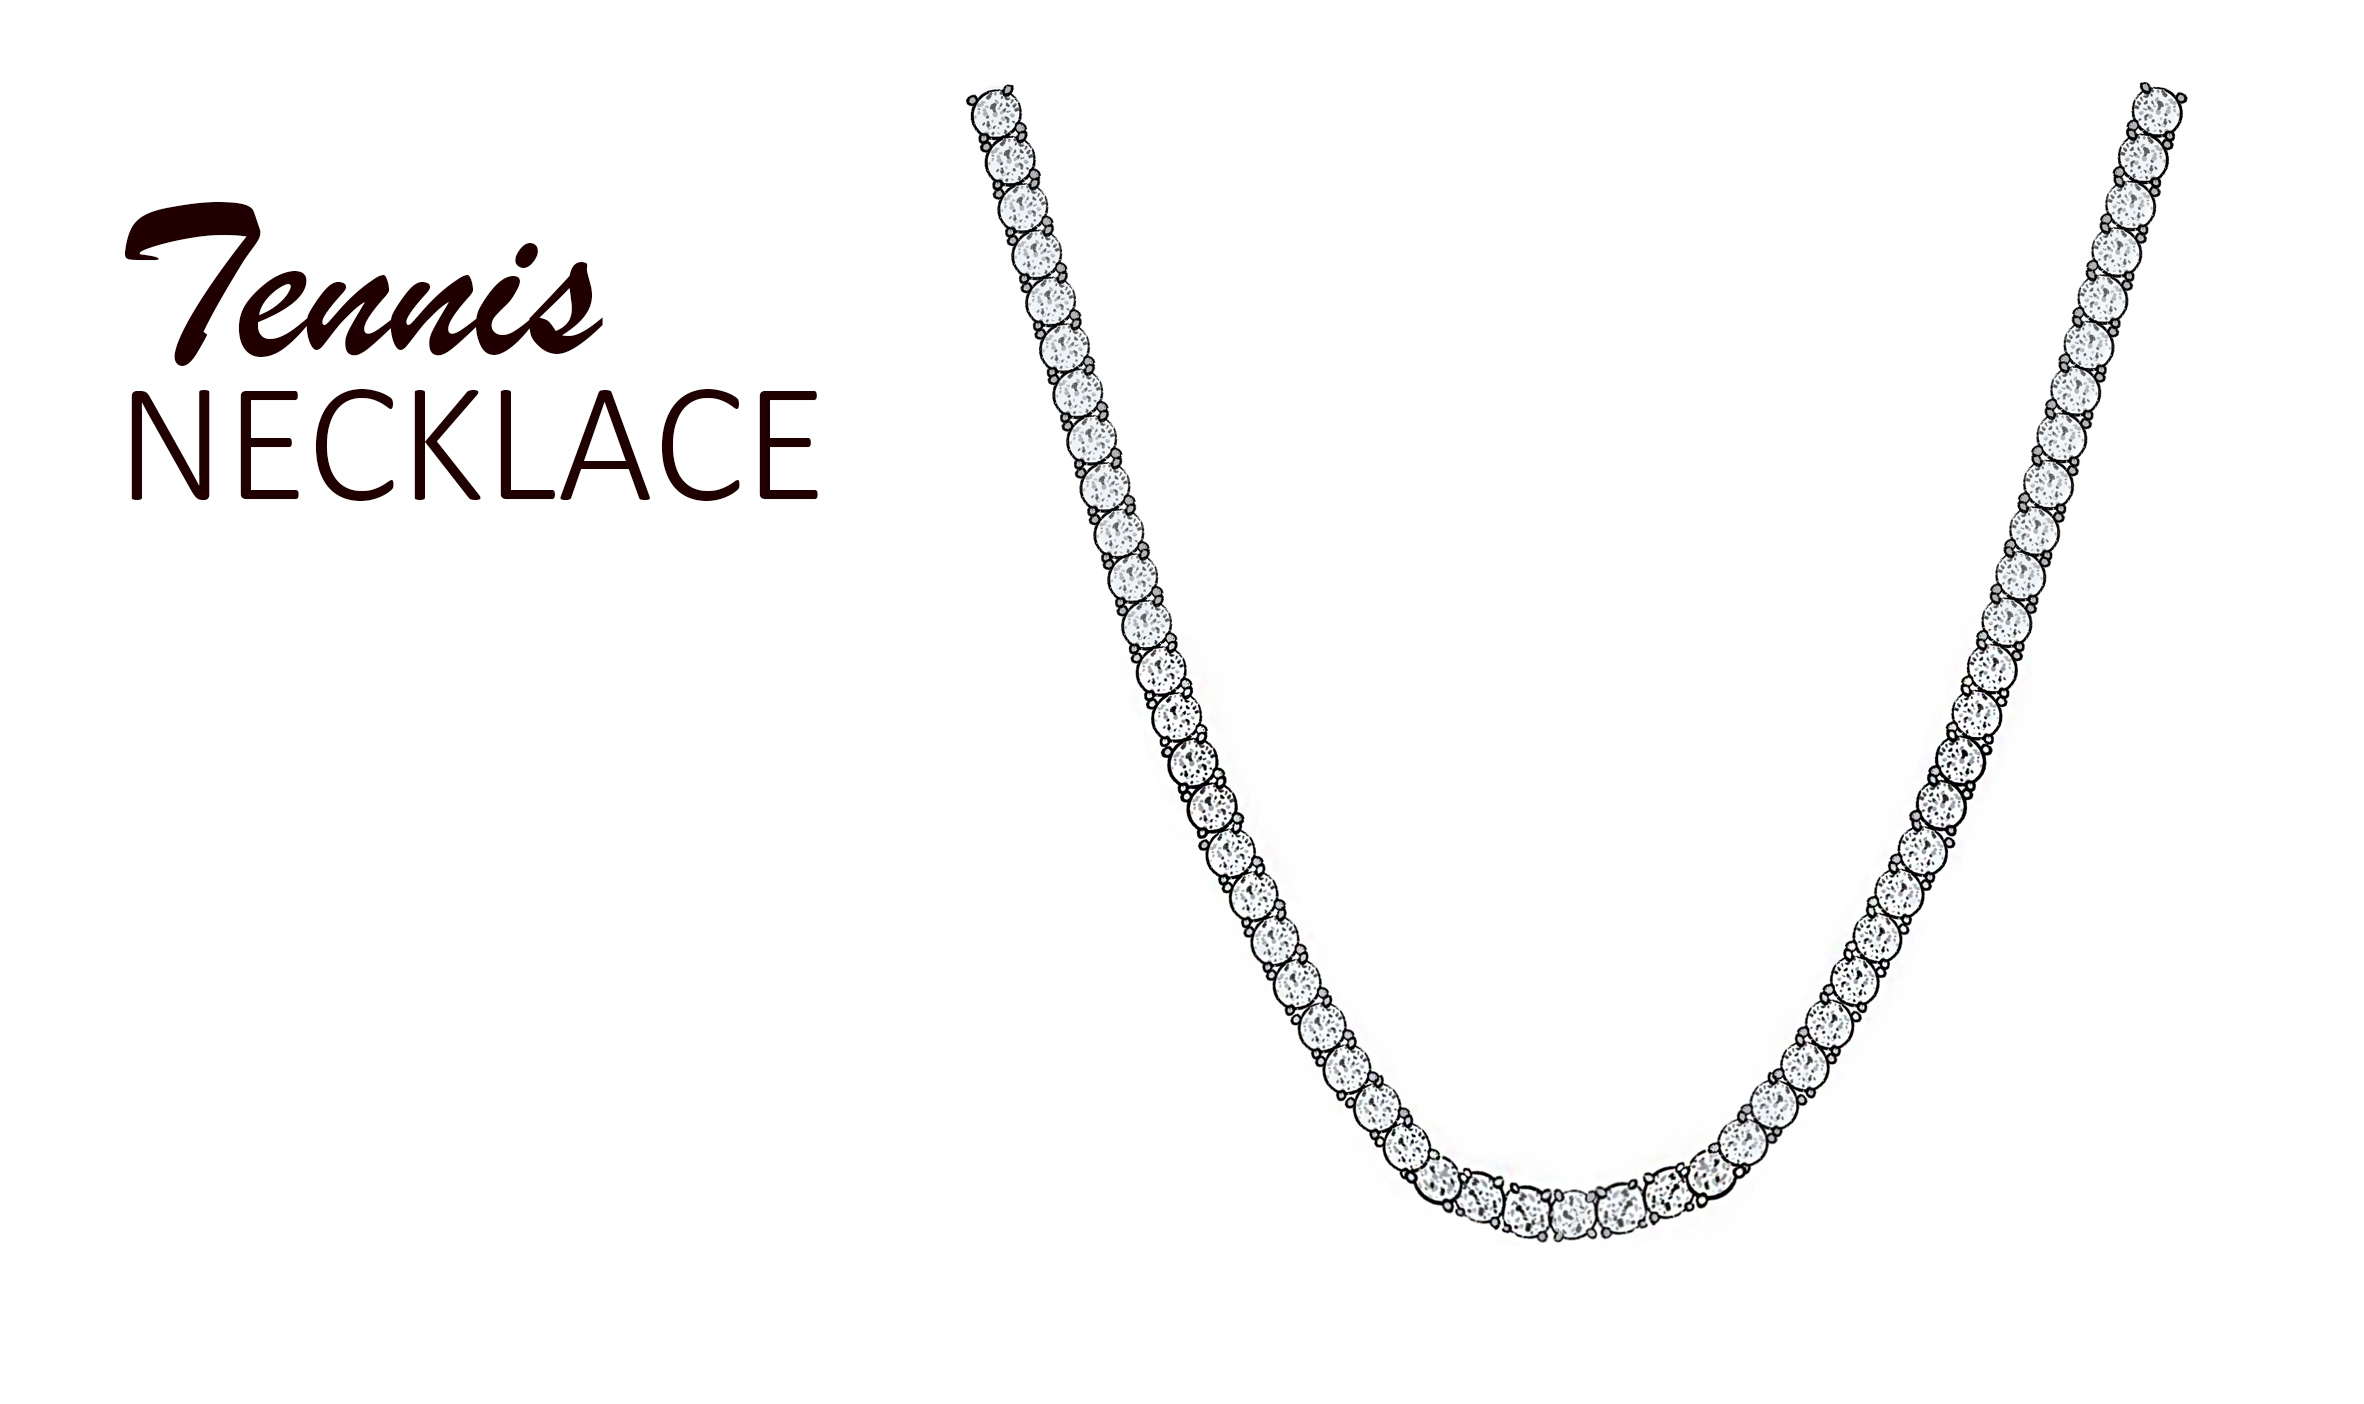 21 Different types of Necklaces Design for Women - JTL Blog